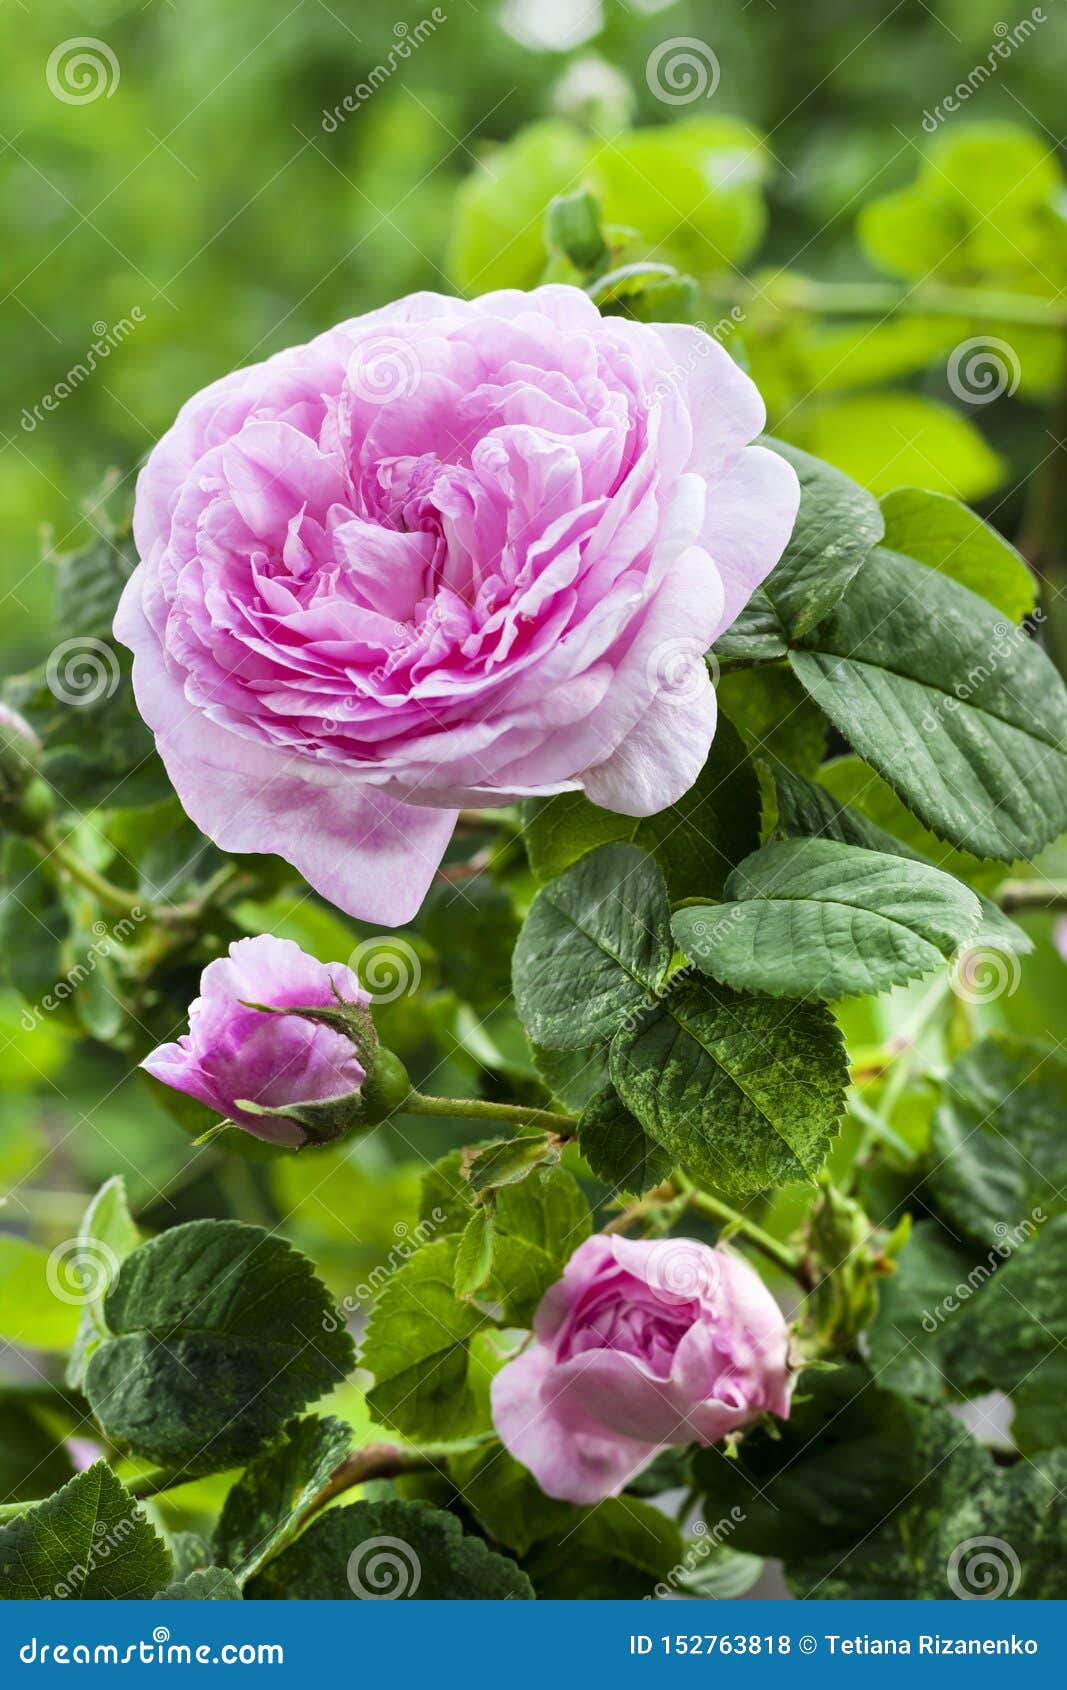 rosa centifolia rose des peintres flower closeup on garden background